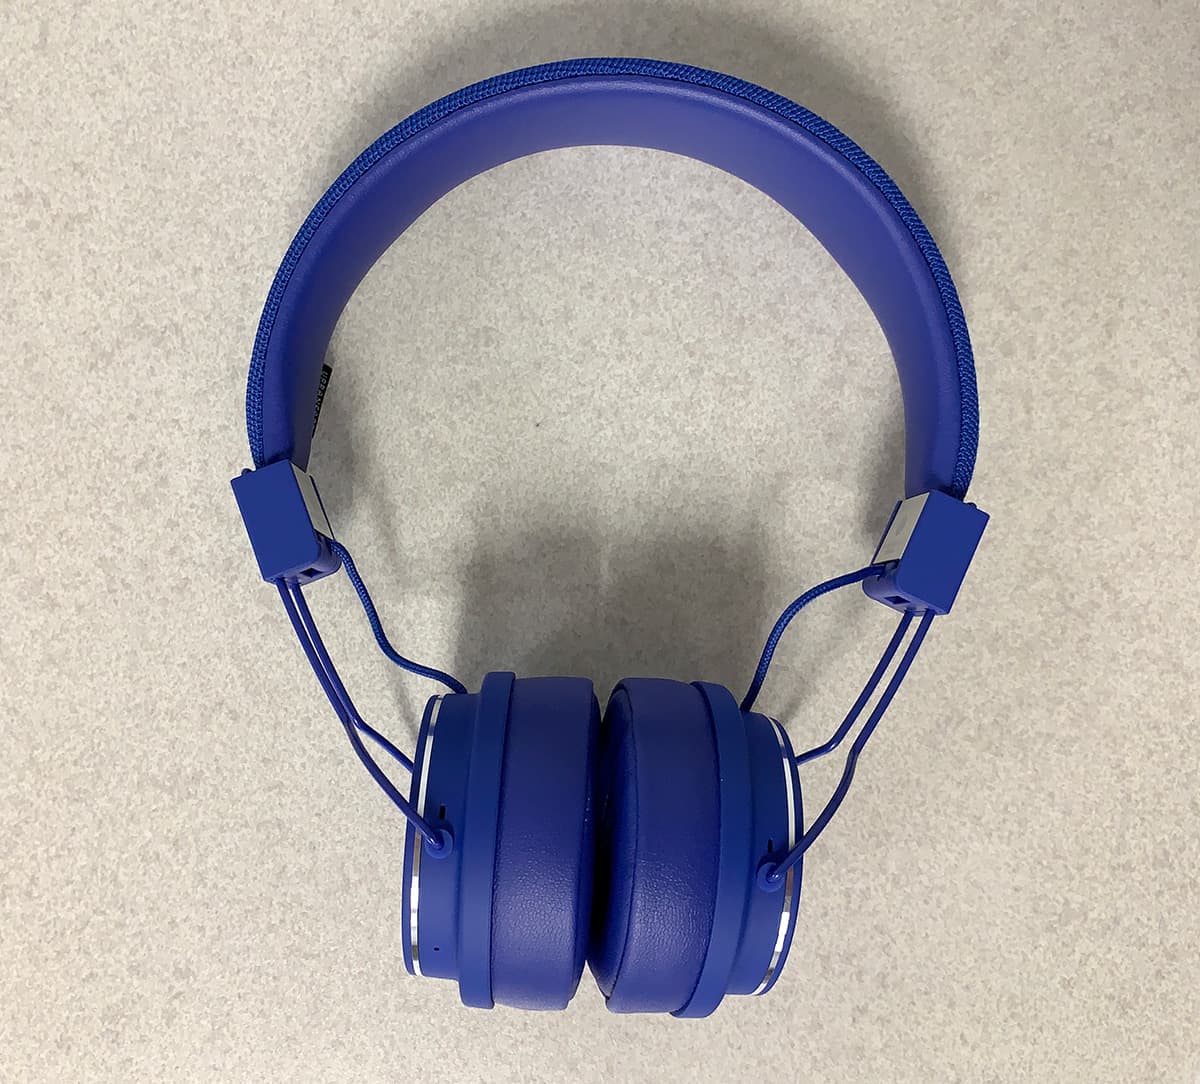 Urbanears Plattan 2 Bluetooth Wireless Headphones review - The 